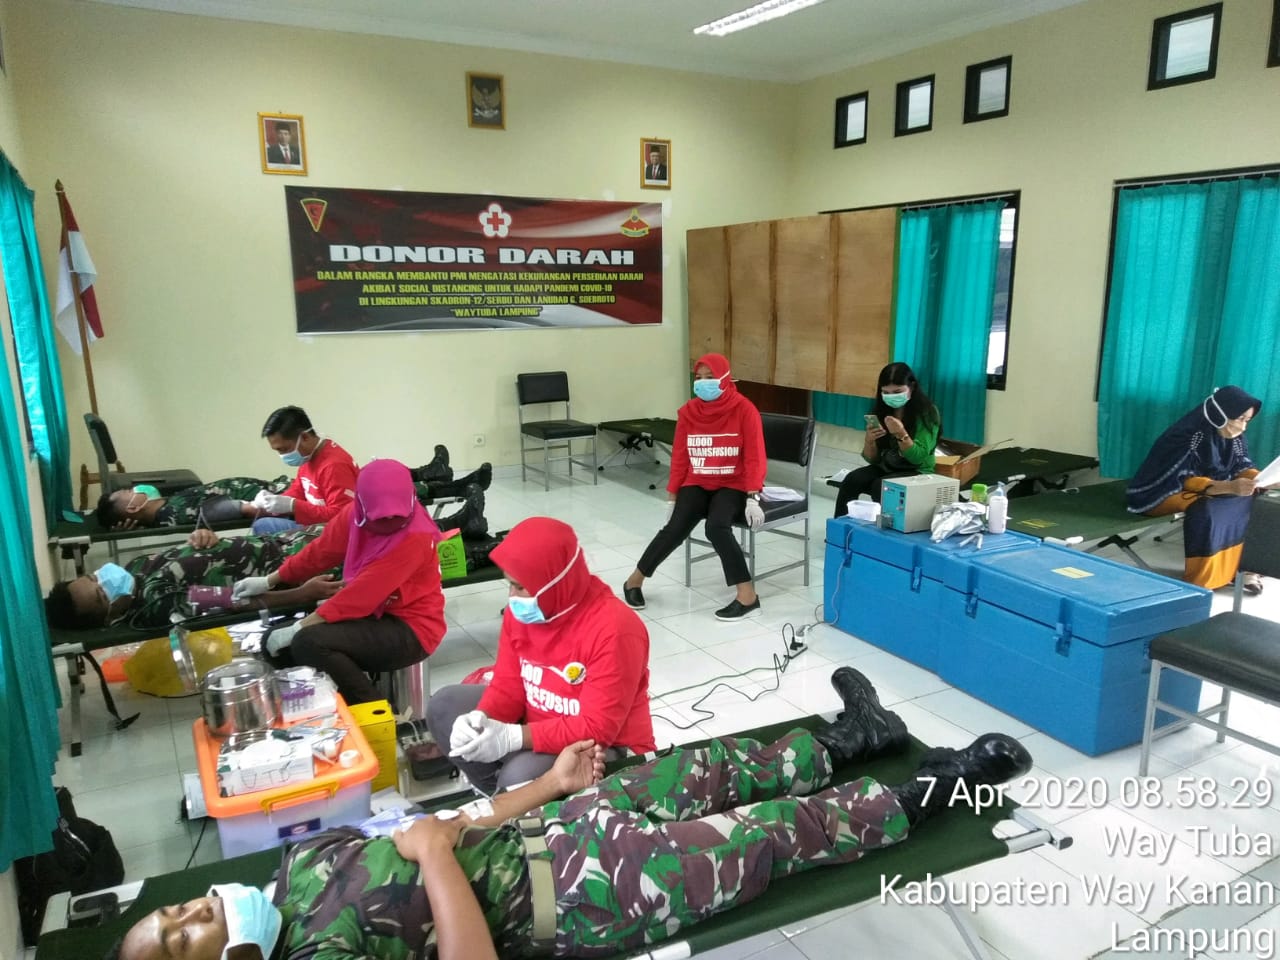 Skadron 12 Serbu dan Lanud Gatot Subroto Way Tuba Lakukan Donor Darah